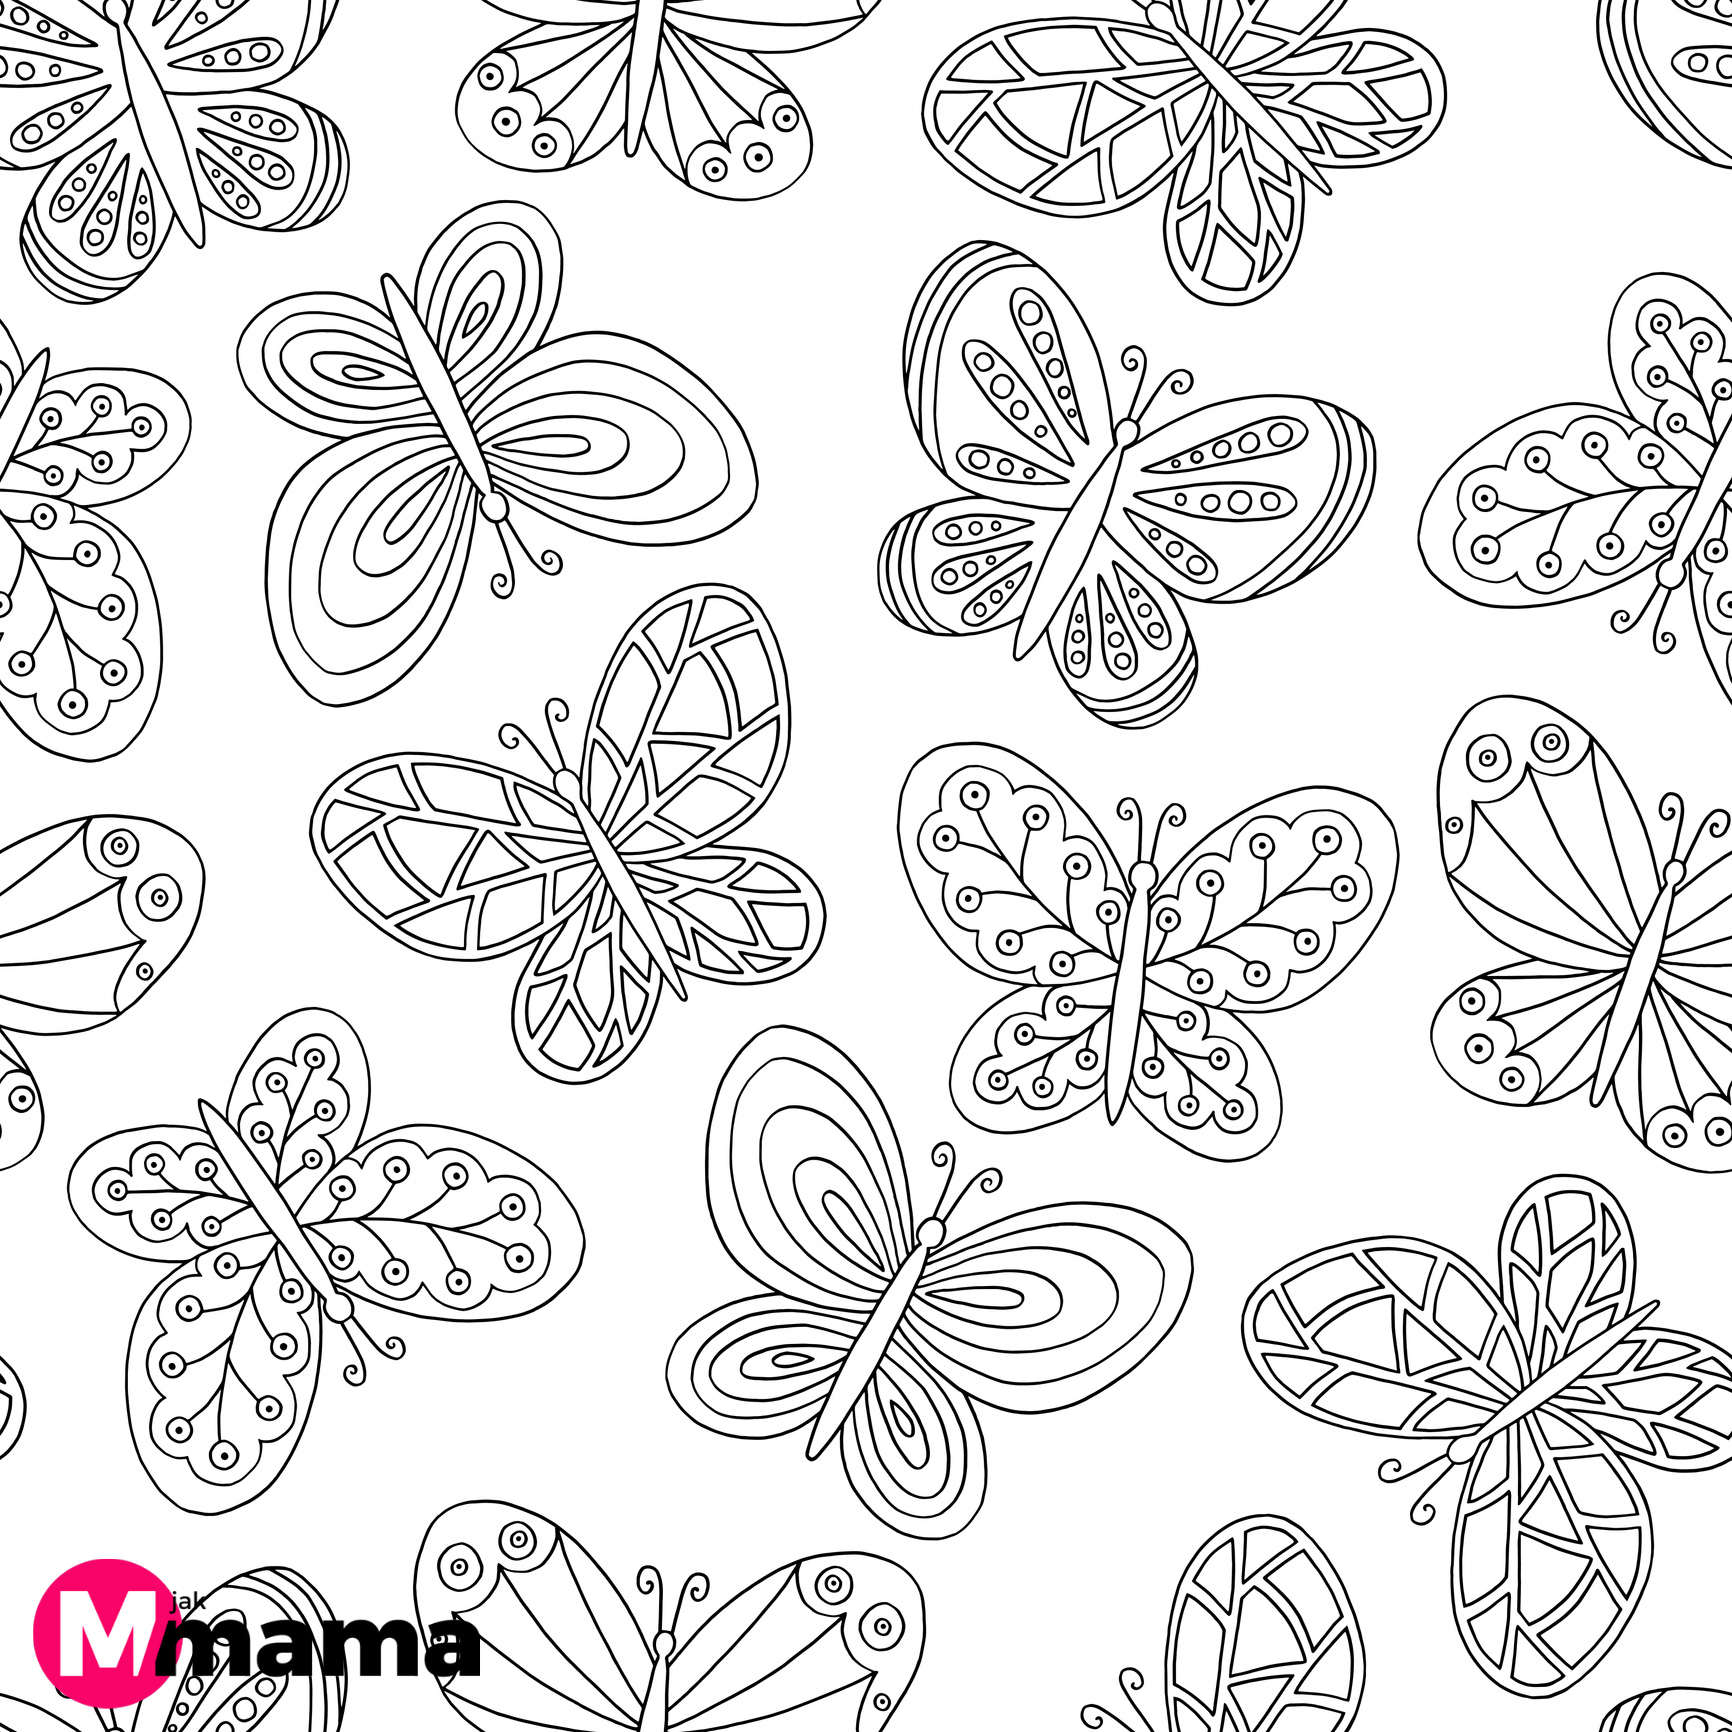 Kolorowanki Dla Dzieci Do Druku Motyle Pcmigtool Images And Photos Finder